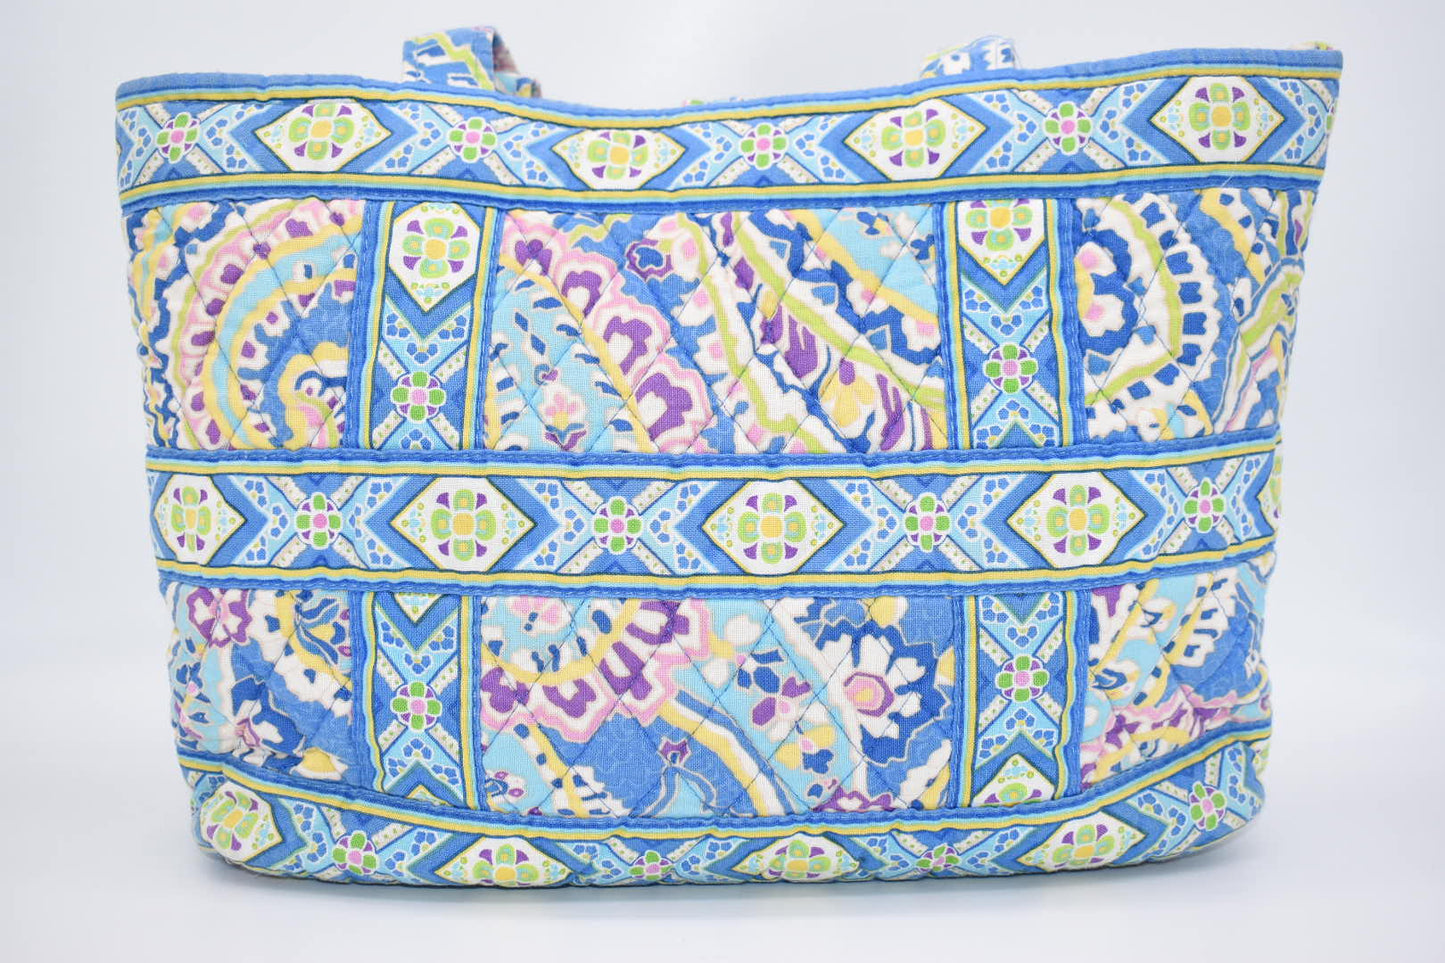 Vera Bradley Tic Tac Tote Bag in "Capri Blue" Pattern